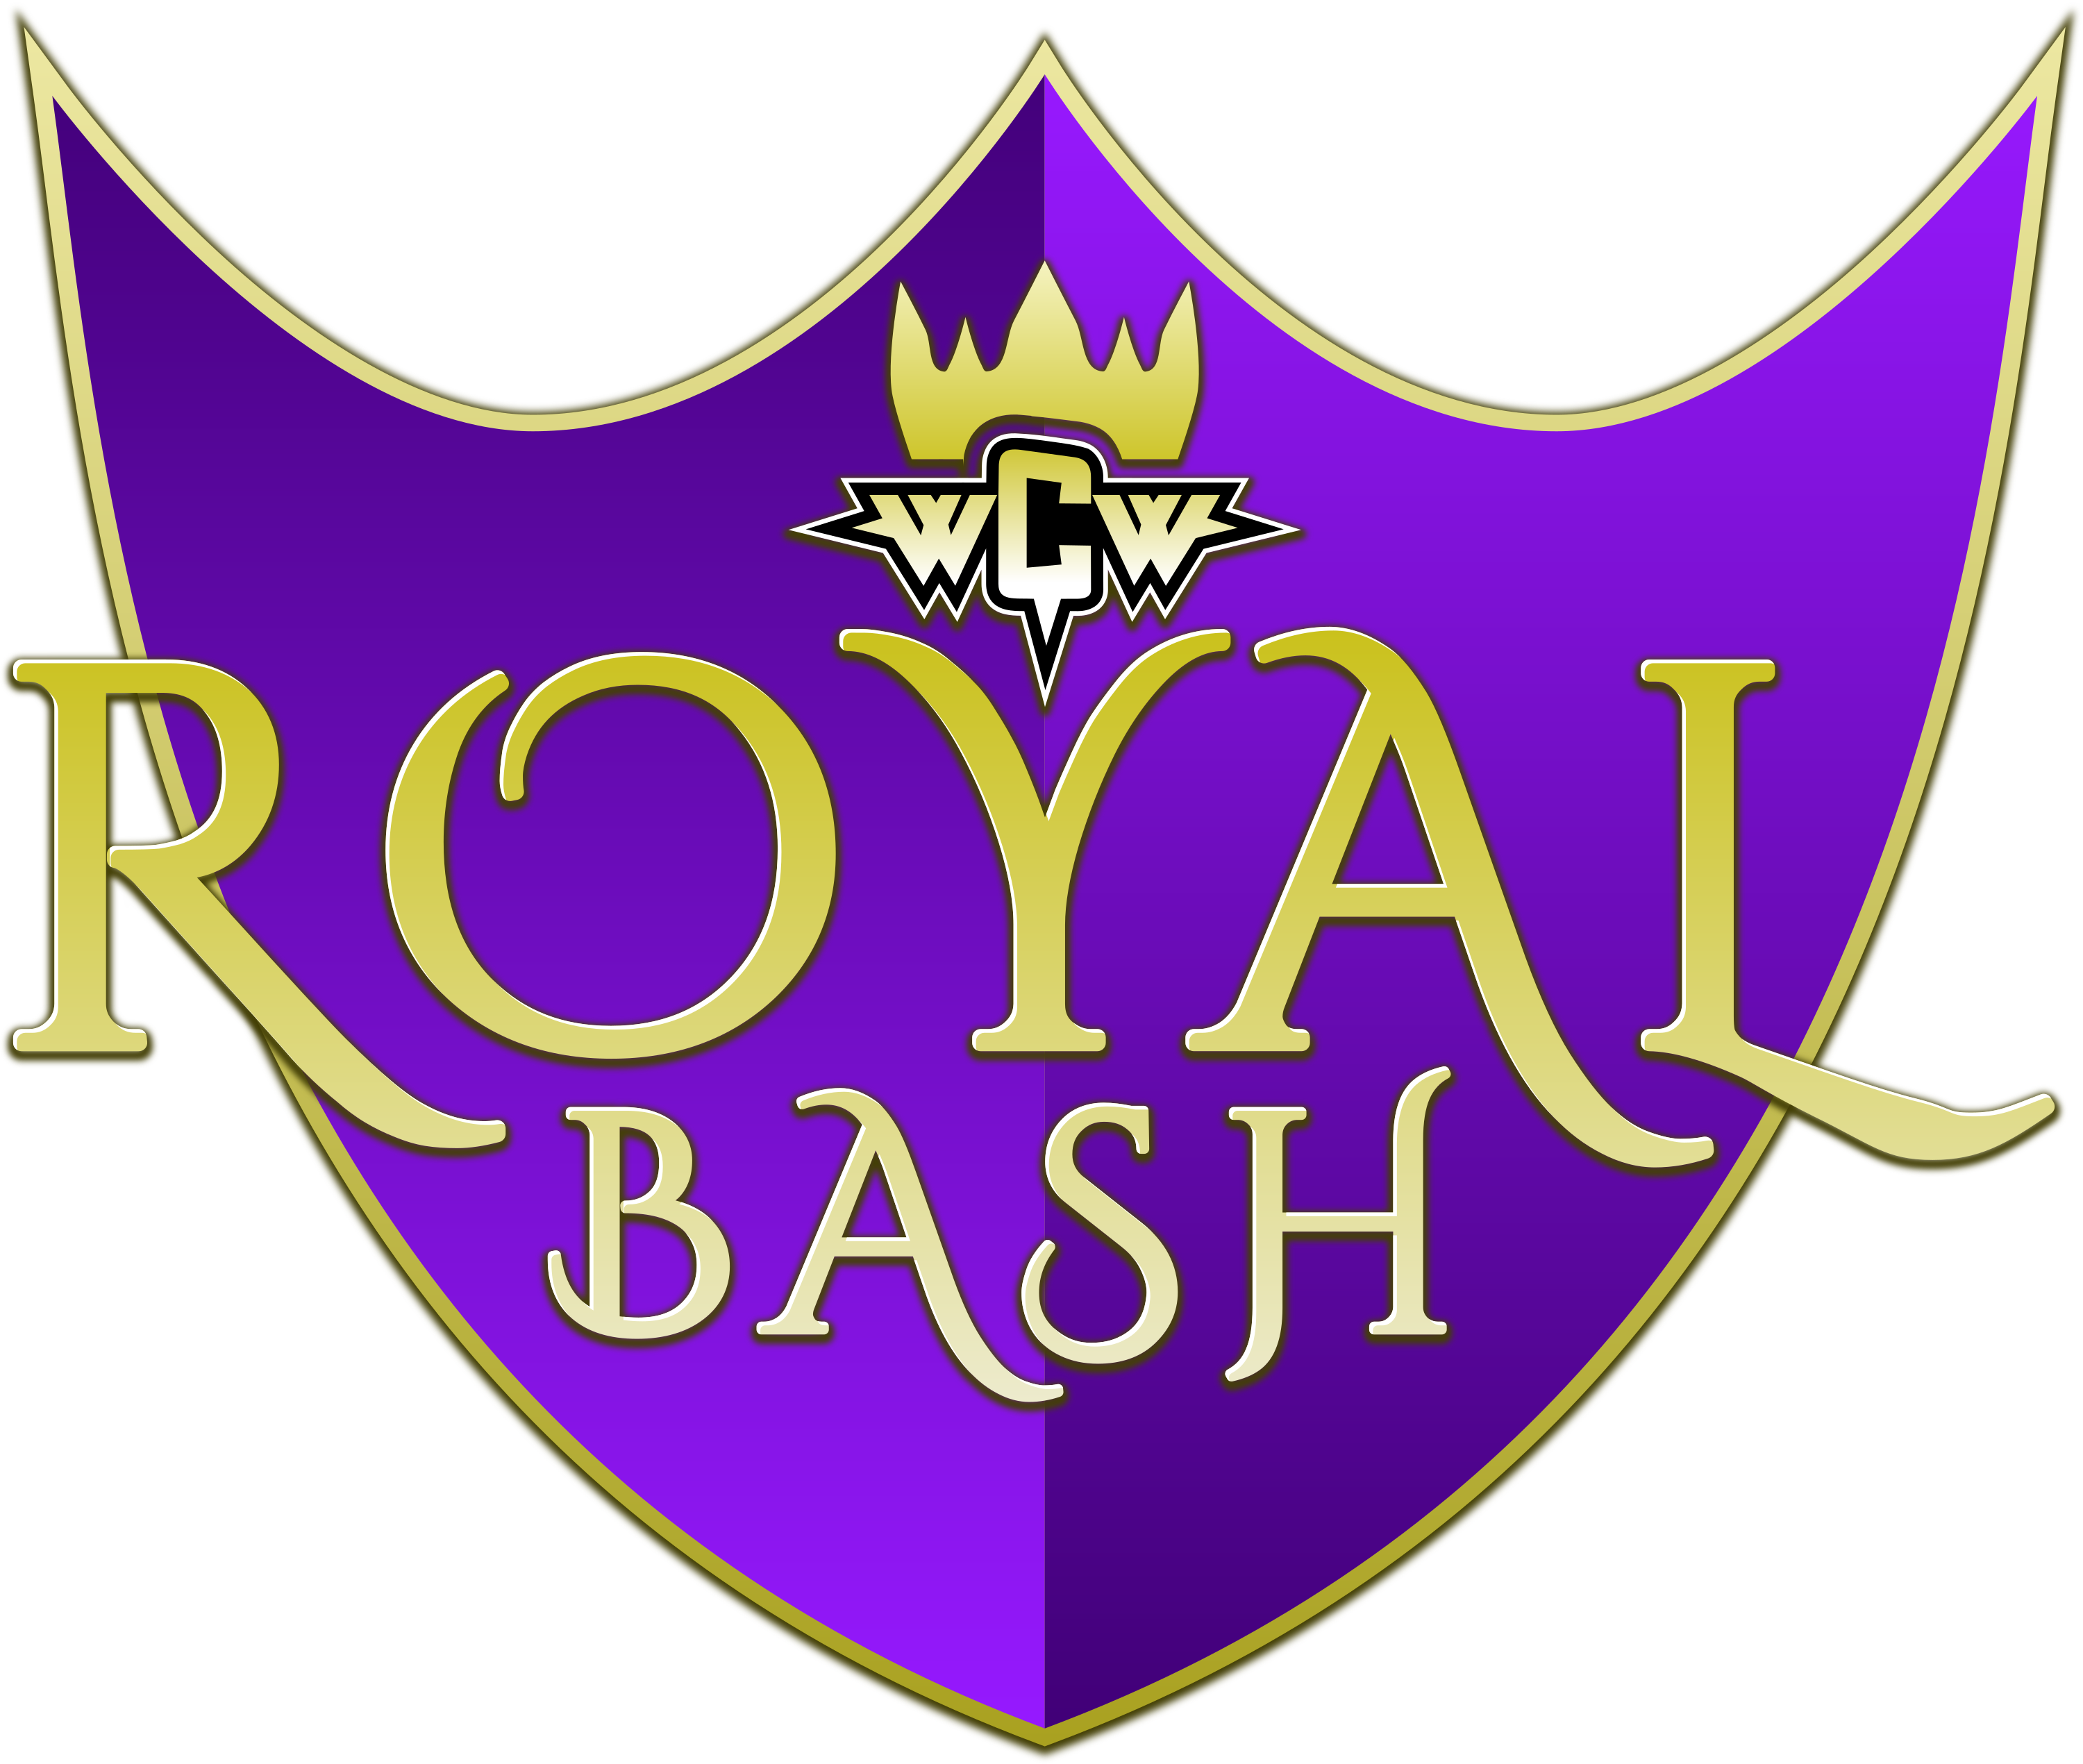 WCW Royal Bash (Modernized) Logo by DarkVoidPictures on DeviantArt